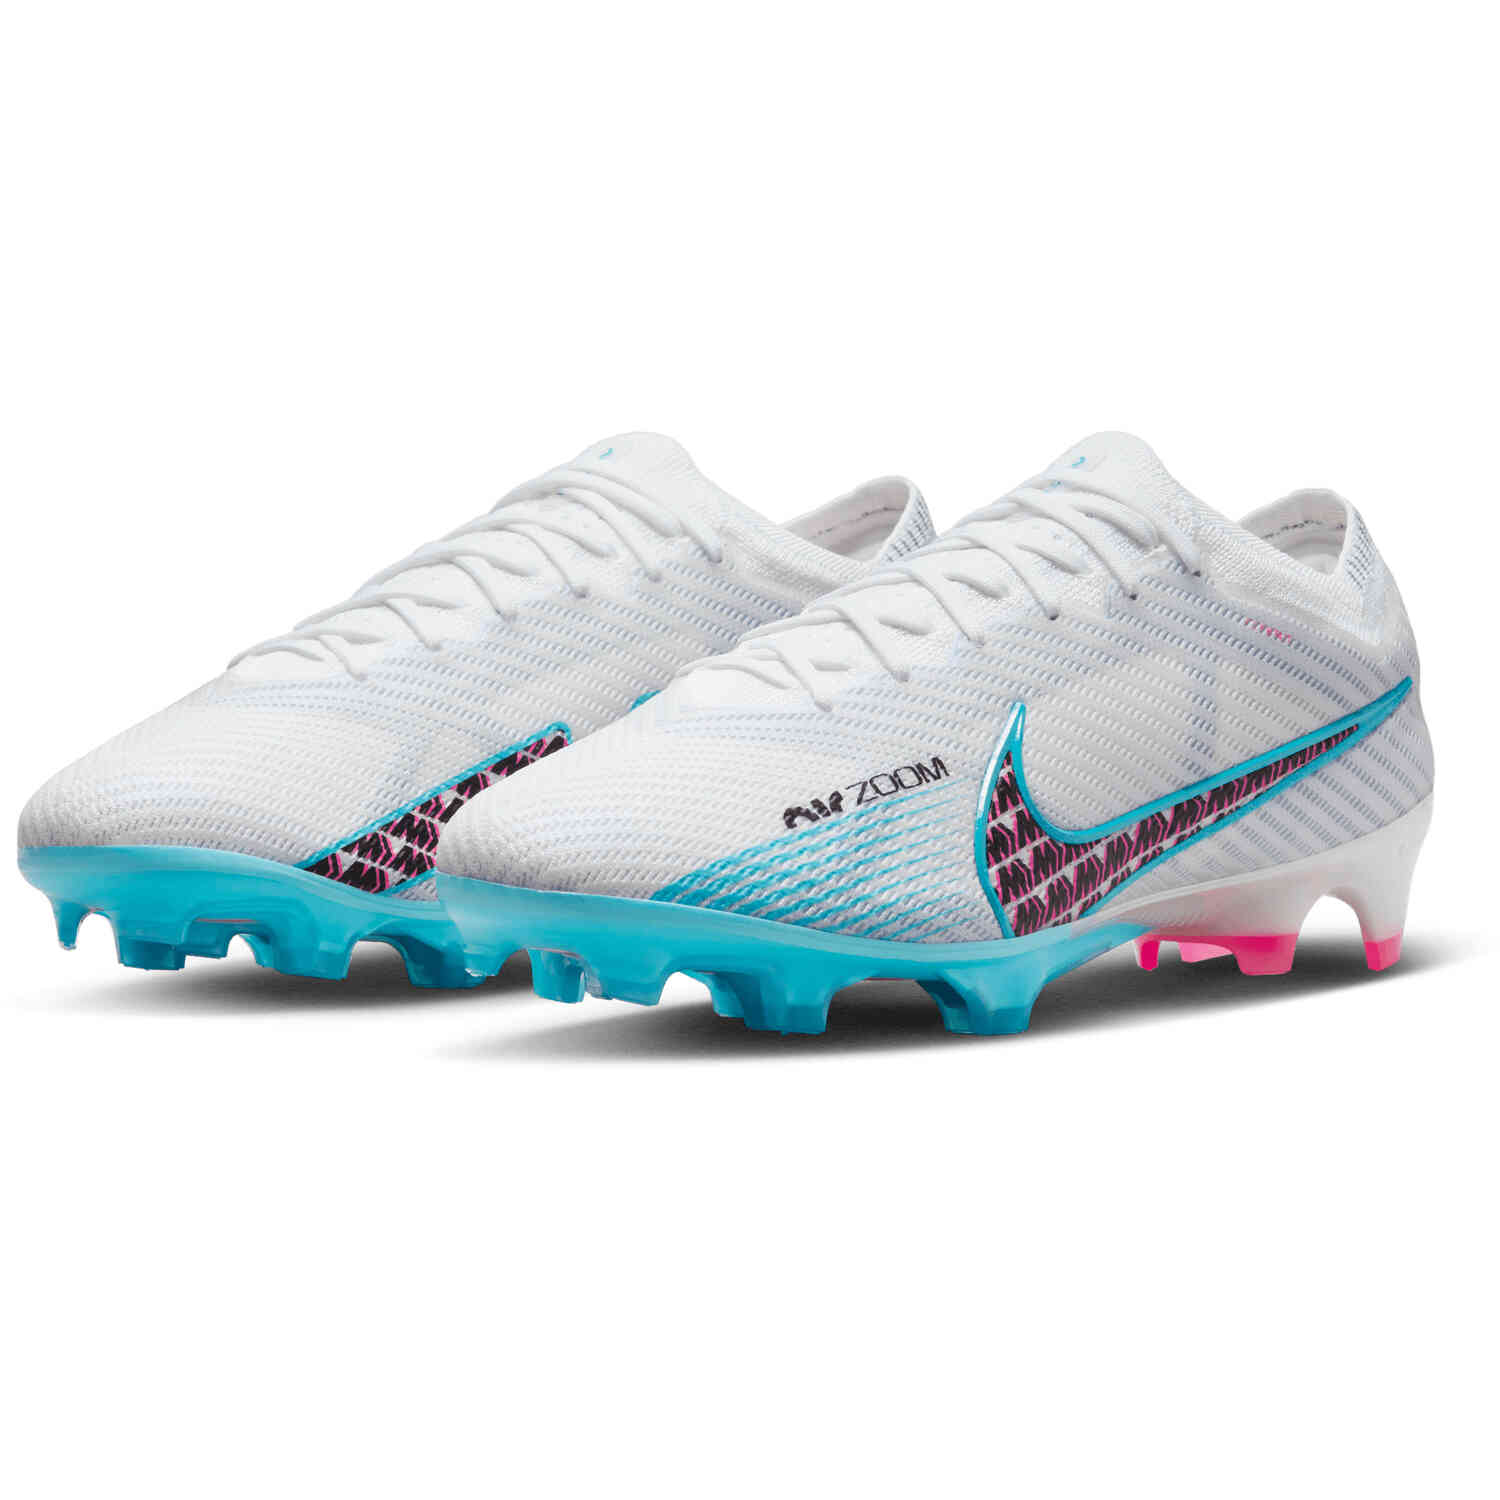 Nike Mercurial 15 Elite FG Firm Ground Soccer Cleats - White, Baltic Blue, Pink Blast, Indigo Haze - Soccer Master